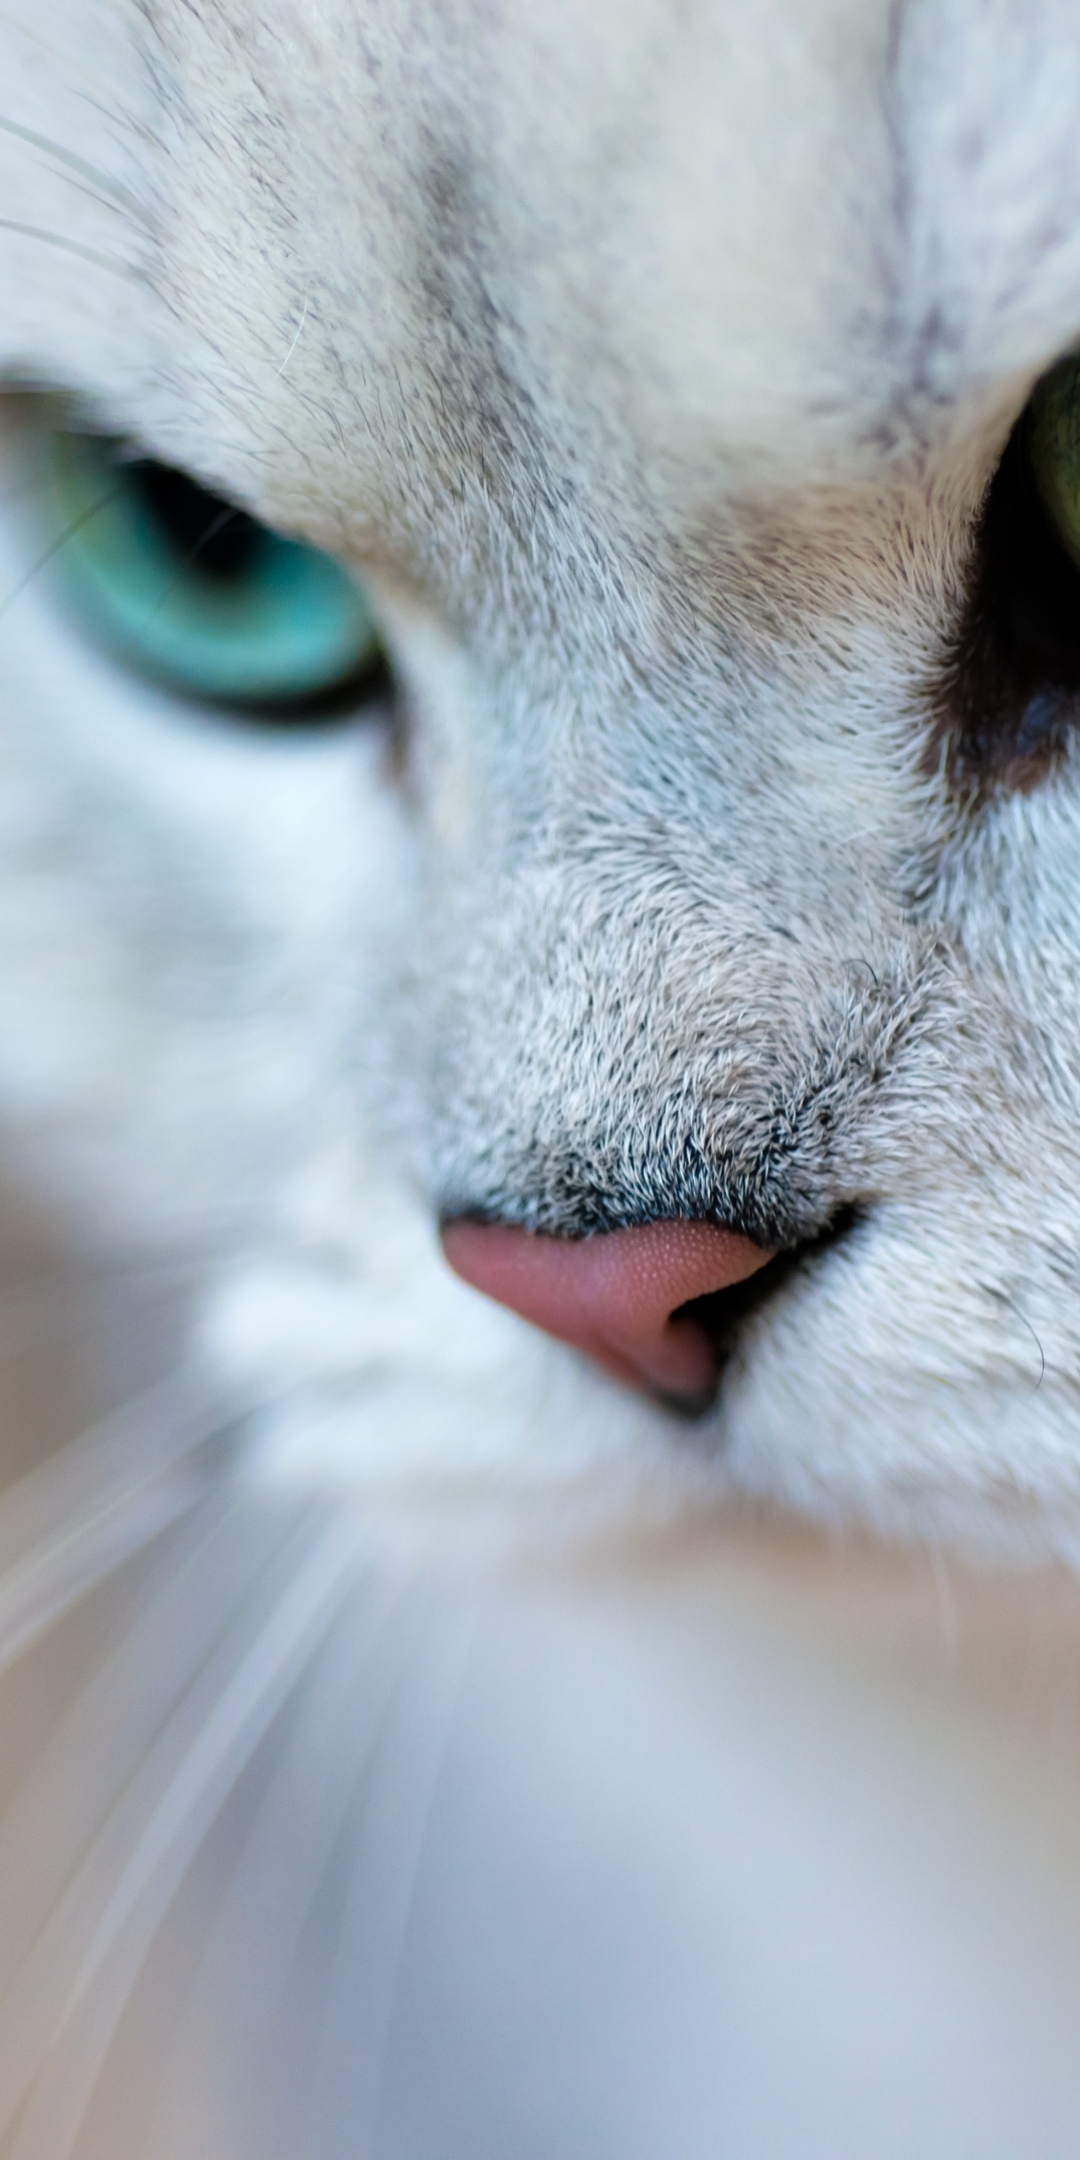 Картинка: Кошка, кот, взгляд, глаза, усы, нос